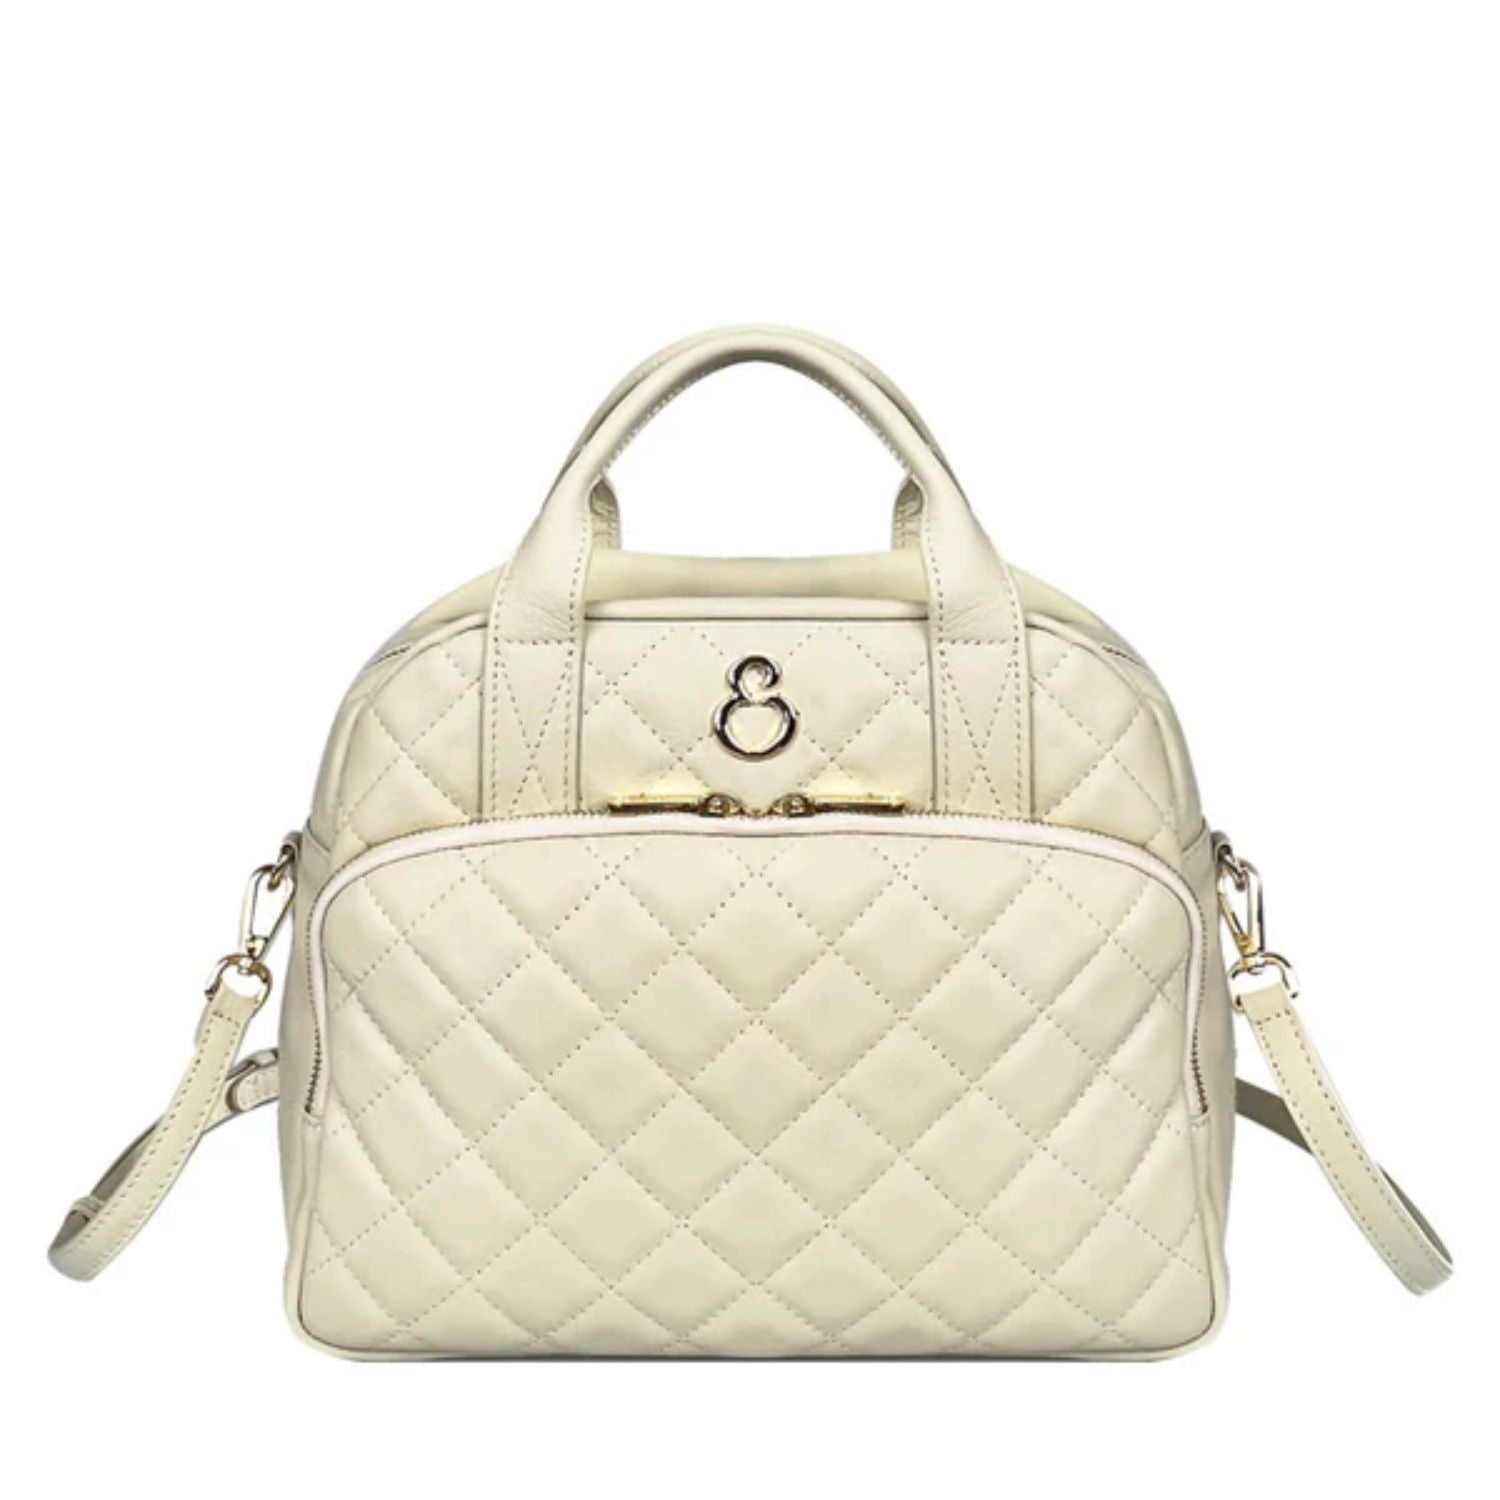 Megane Matelassè Butter – Handbag – Limited Edition